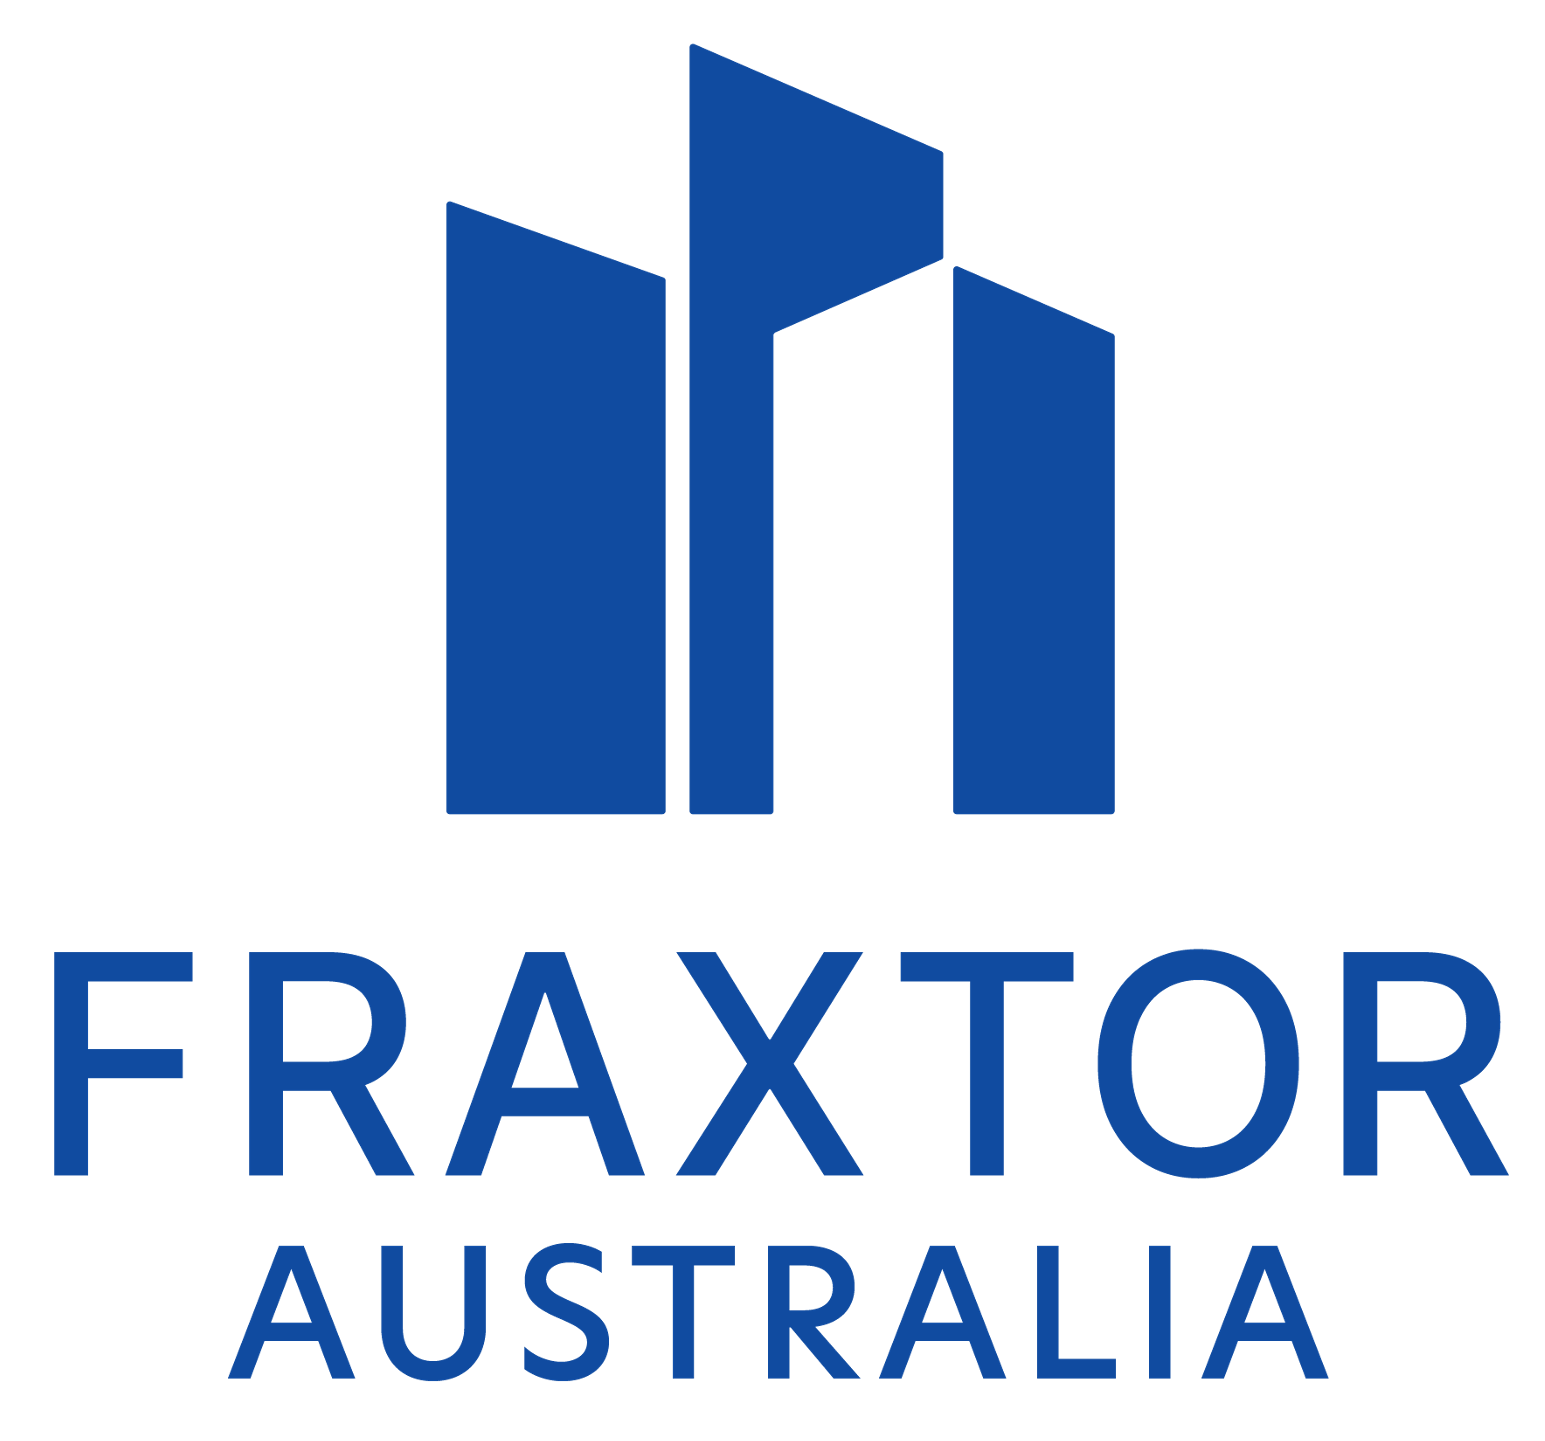 Fraxtor Australia